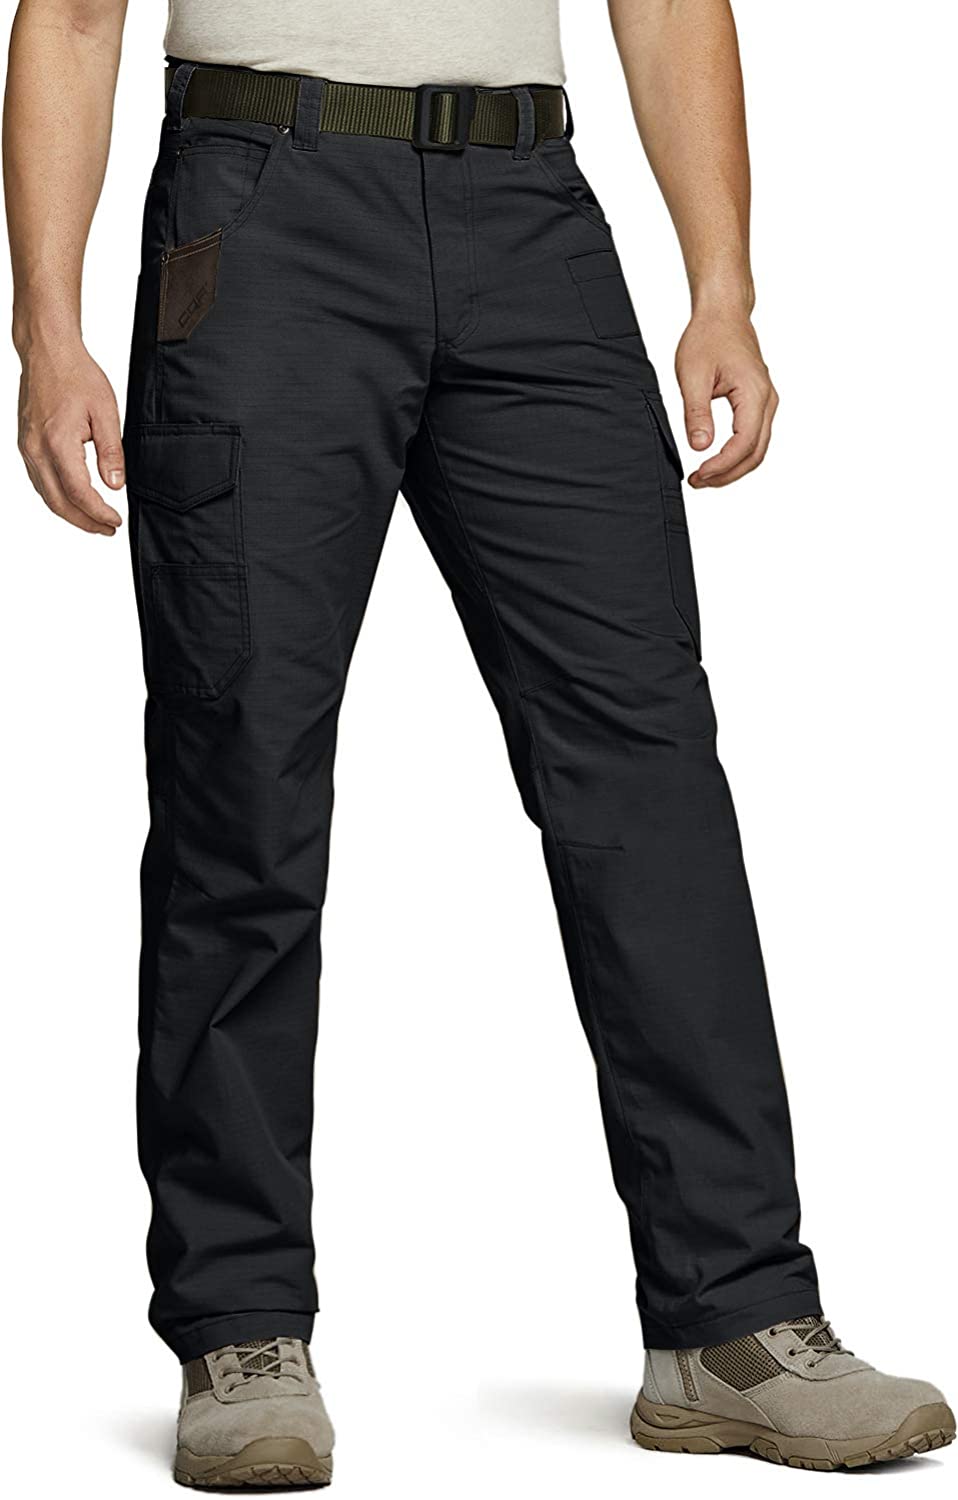 CQR Men's Flex Ripstop Work Pants Water Resistant Tactical Pants Outdoor Utility Operator EDC Cargo Pants 